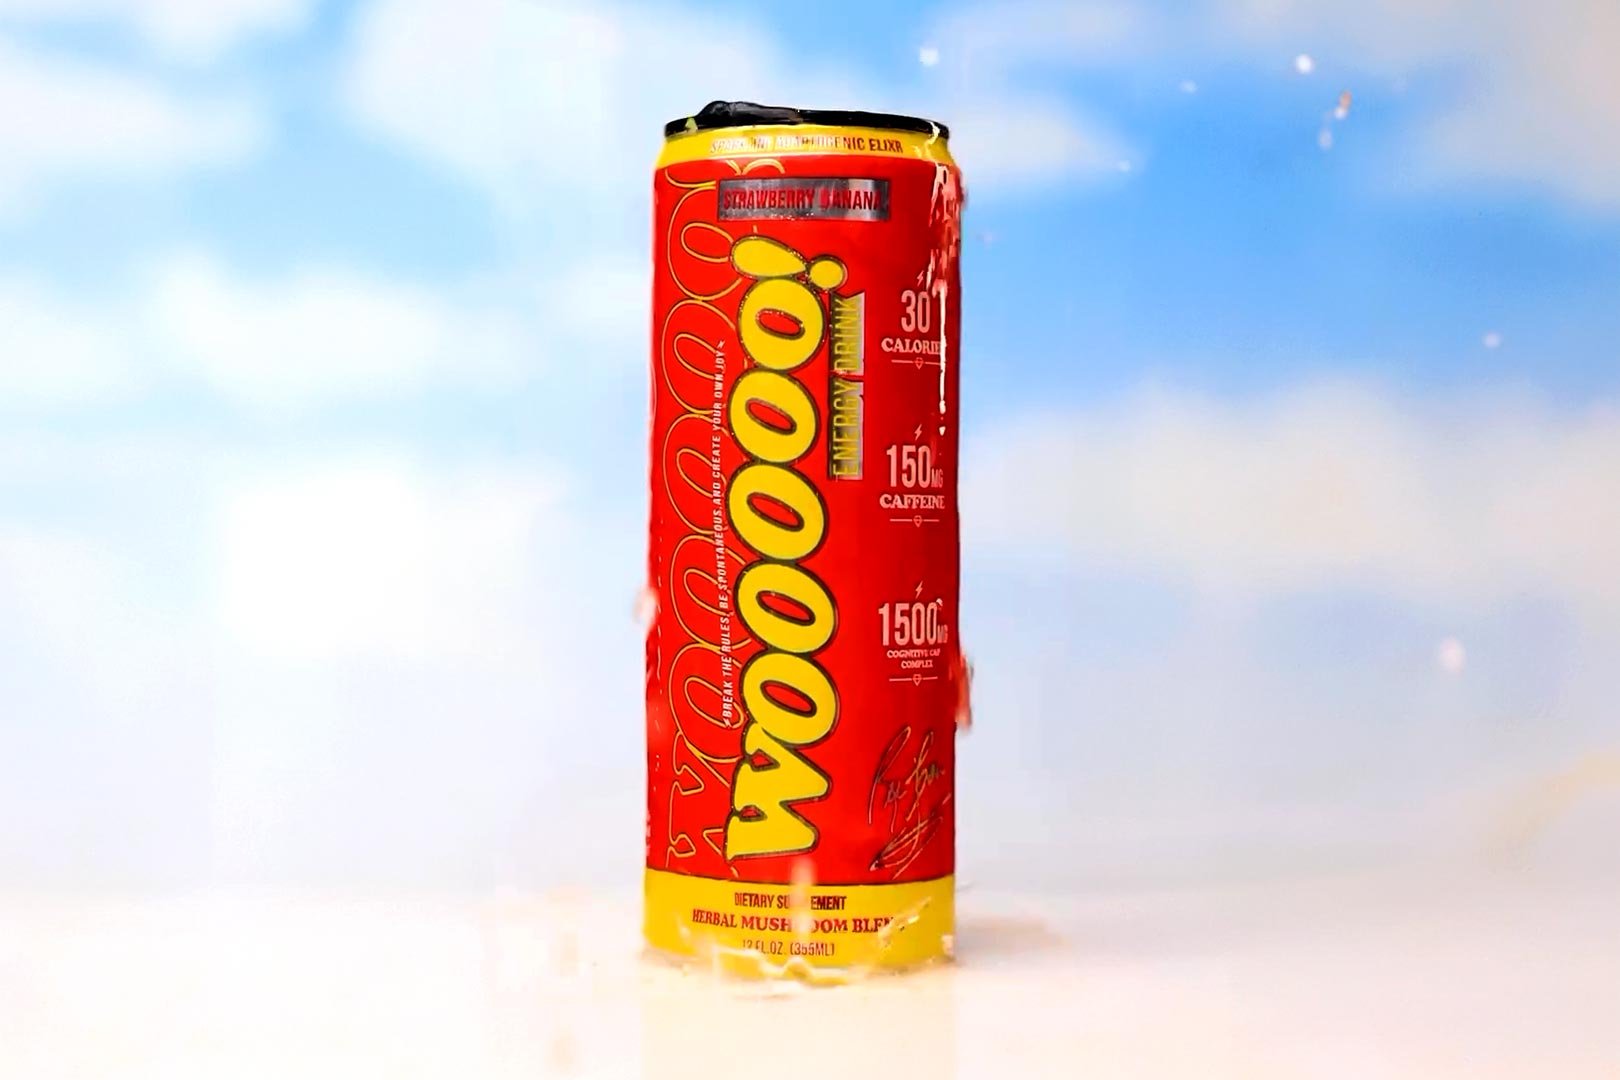 Rebrand Of Wooooo Energy Drink